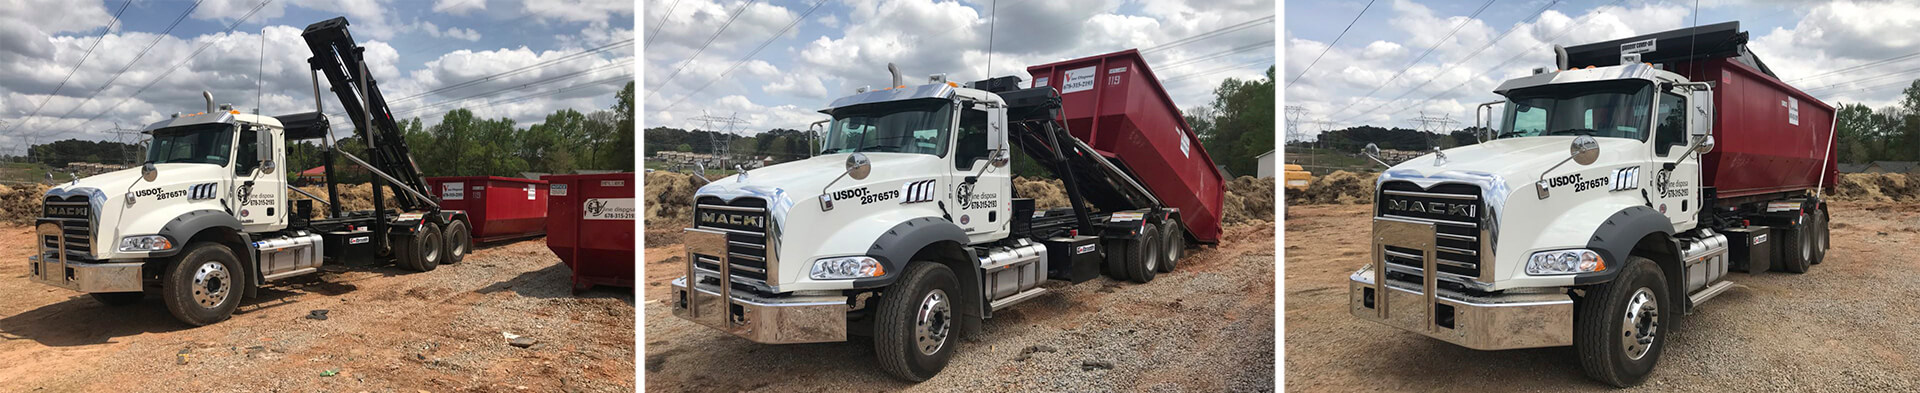 Roll-Off Dumpster Rental in Douglasville, GA